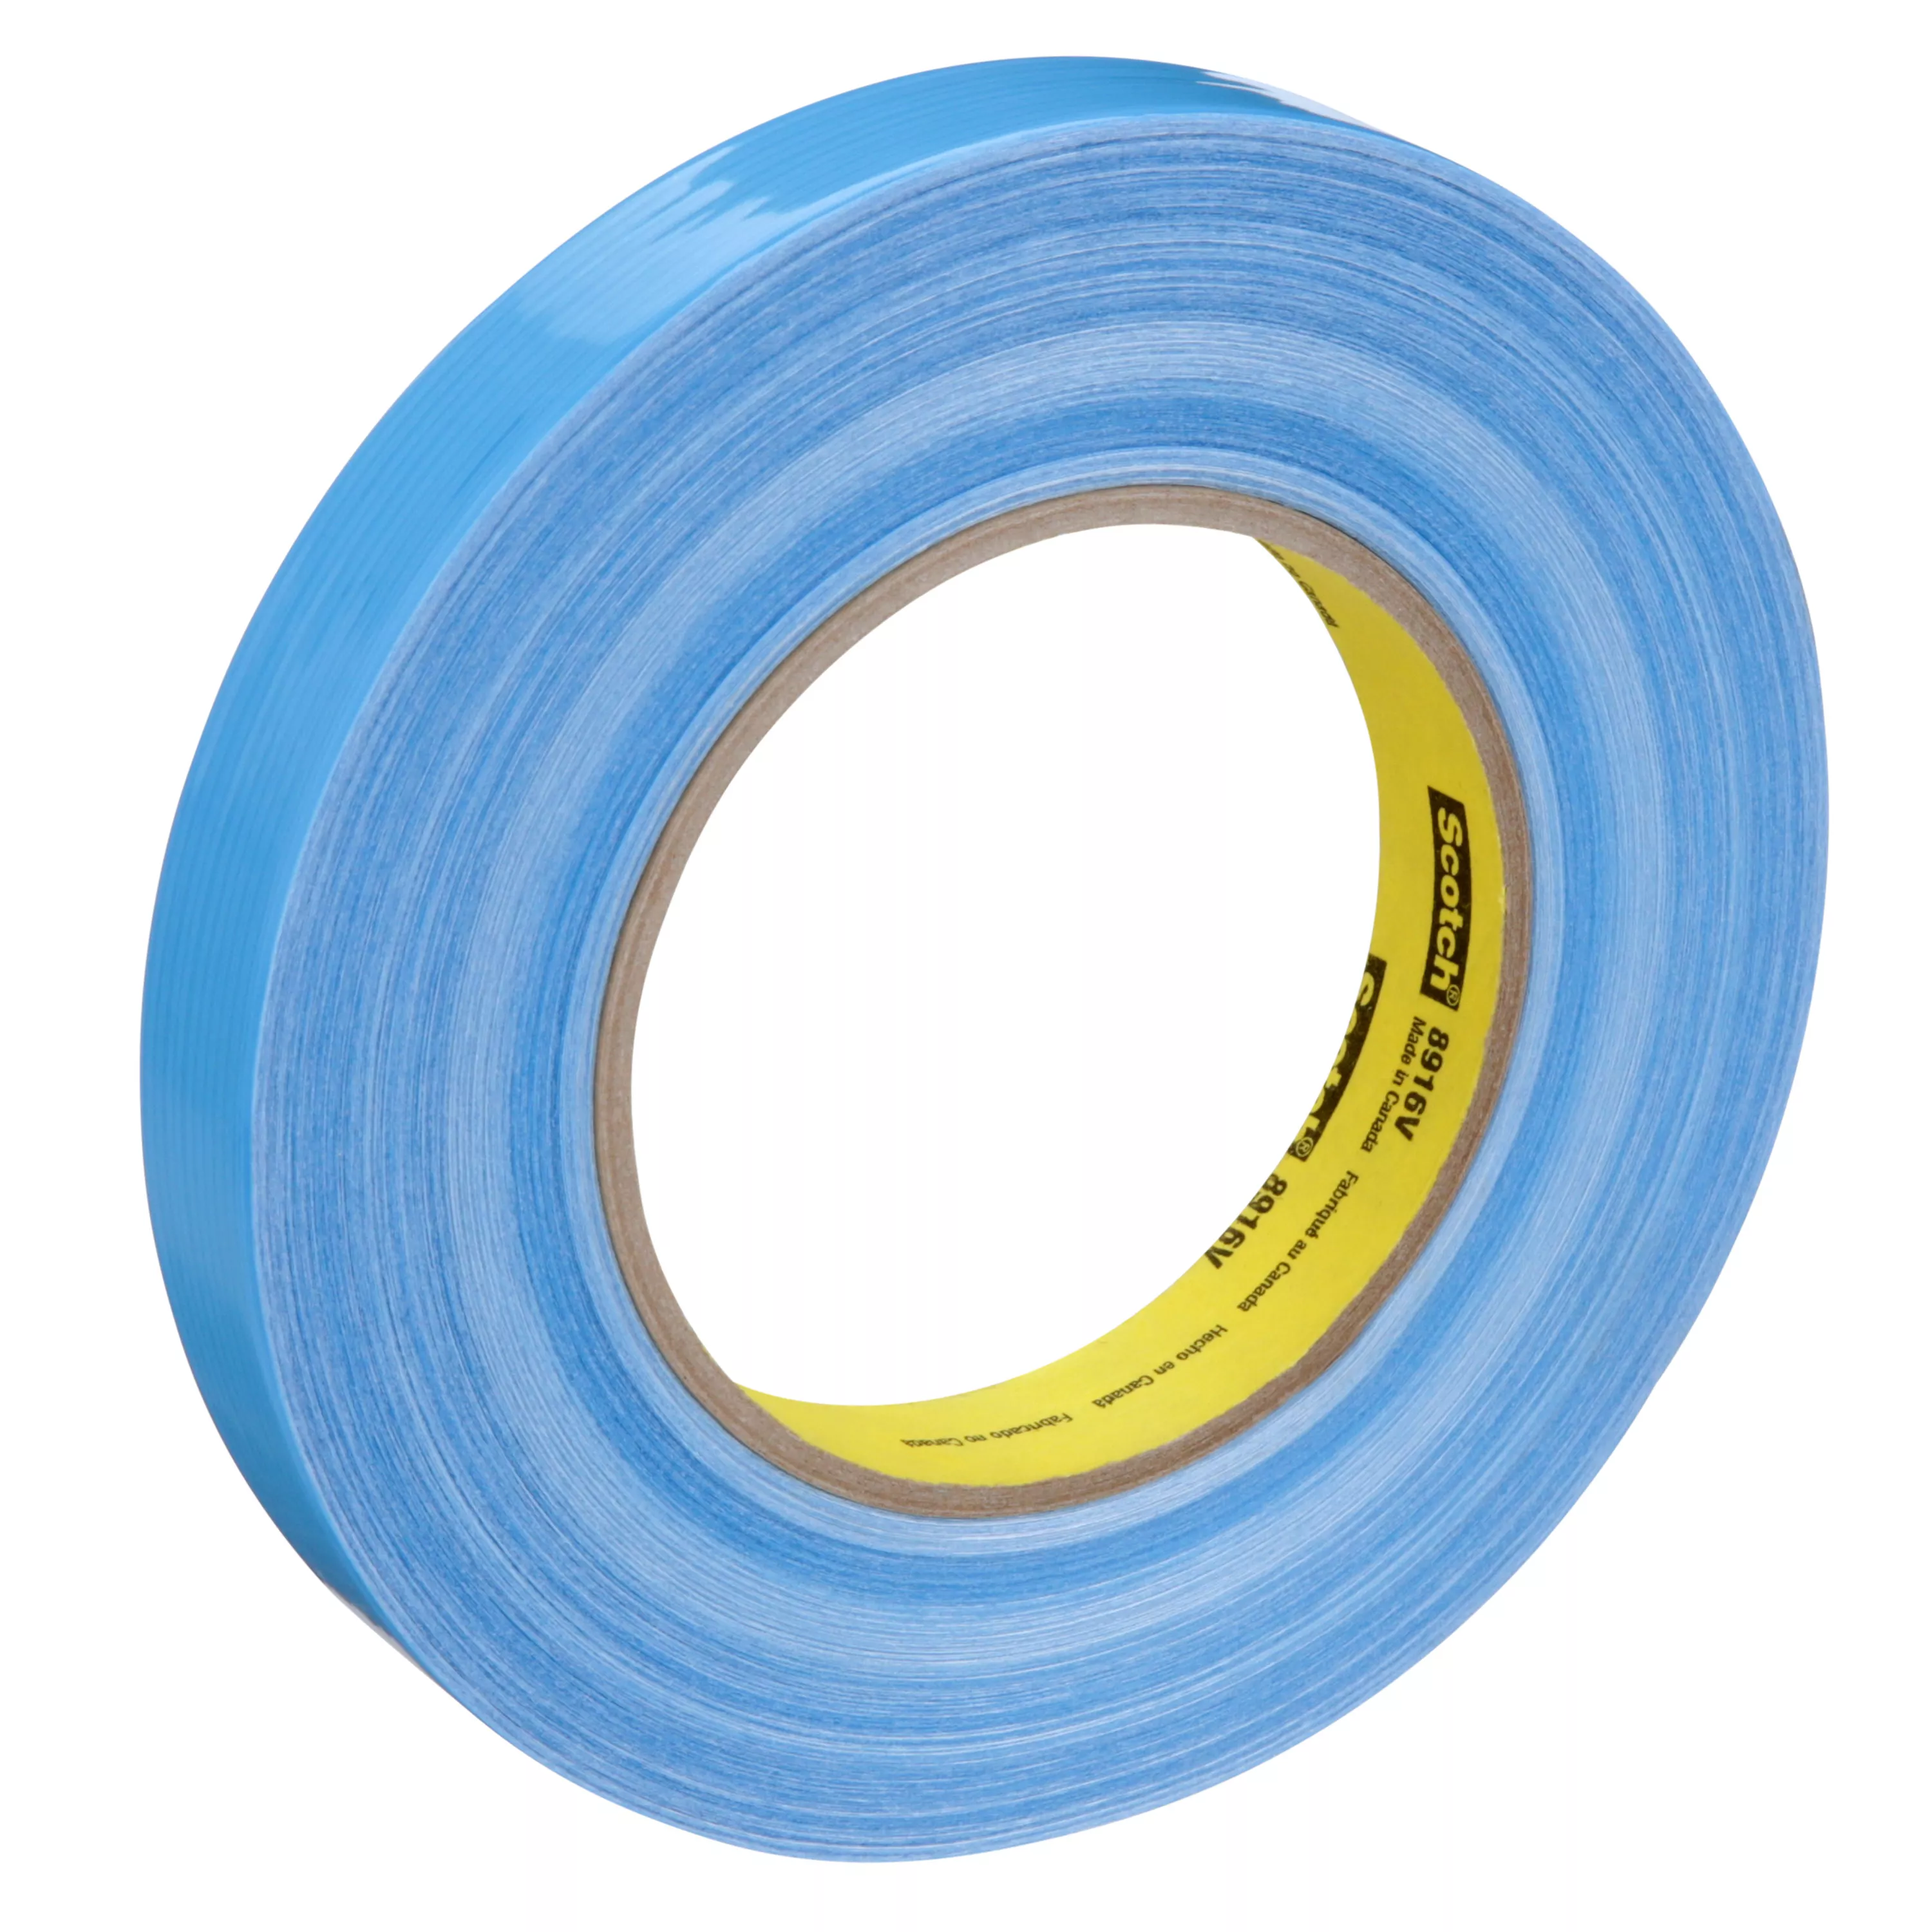 Scotch® Filament Tape 8916V, Blue, 18 mm x 55 m, 6.8 mil, 6.8 mil, 48
Roll/Case